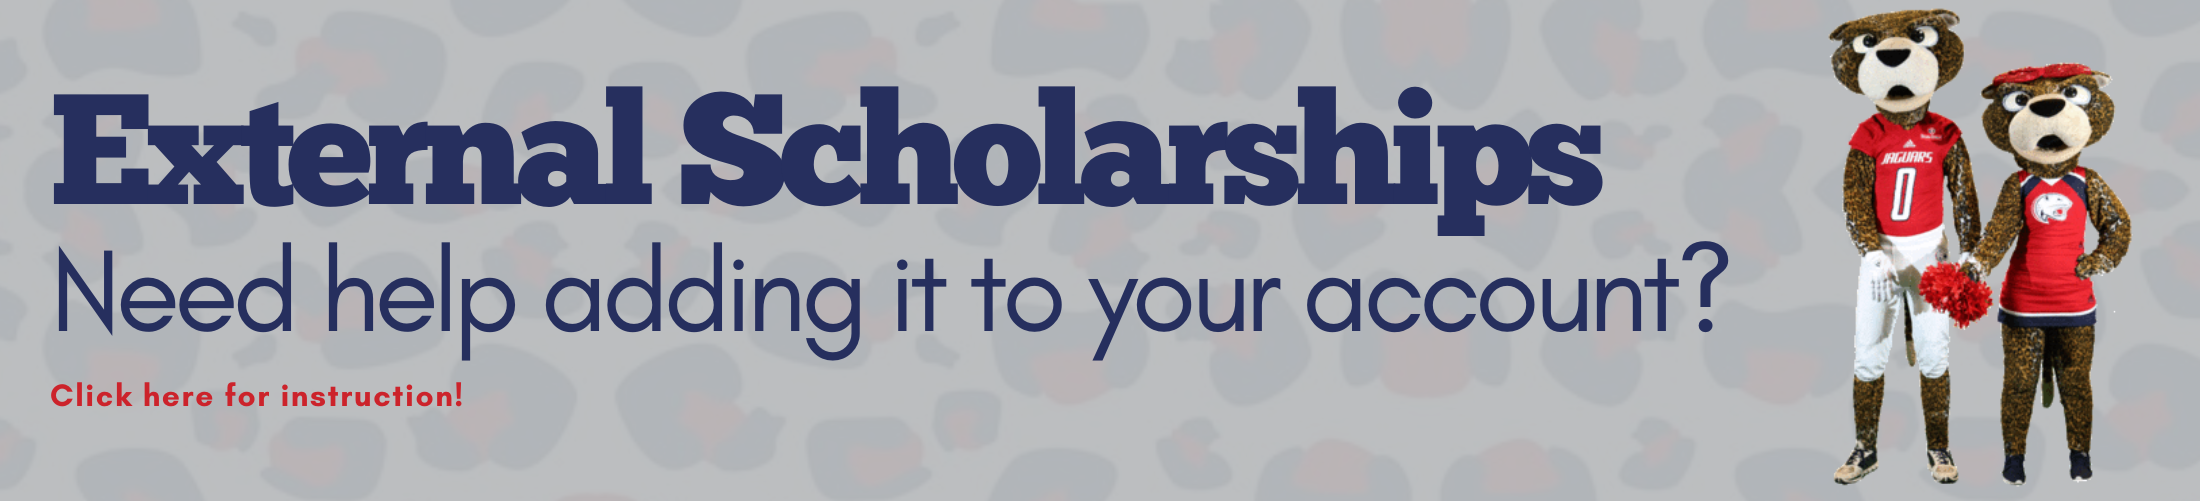 External Scholarships